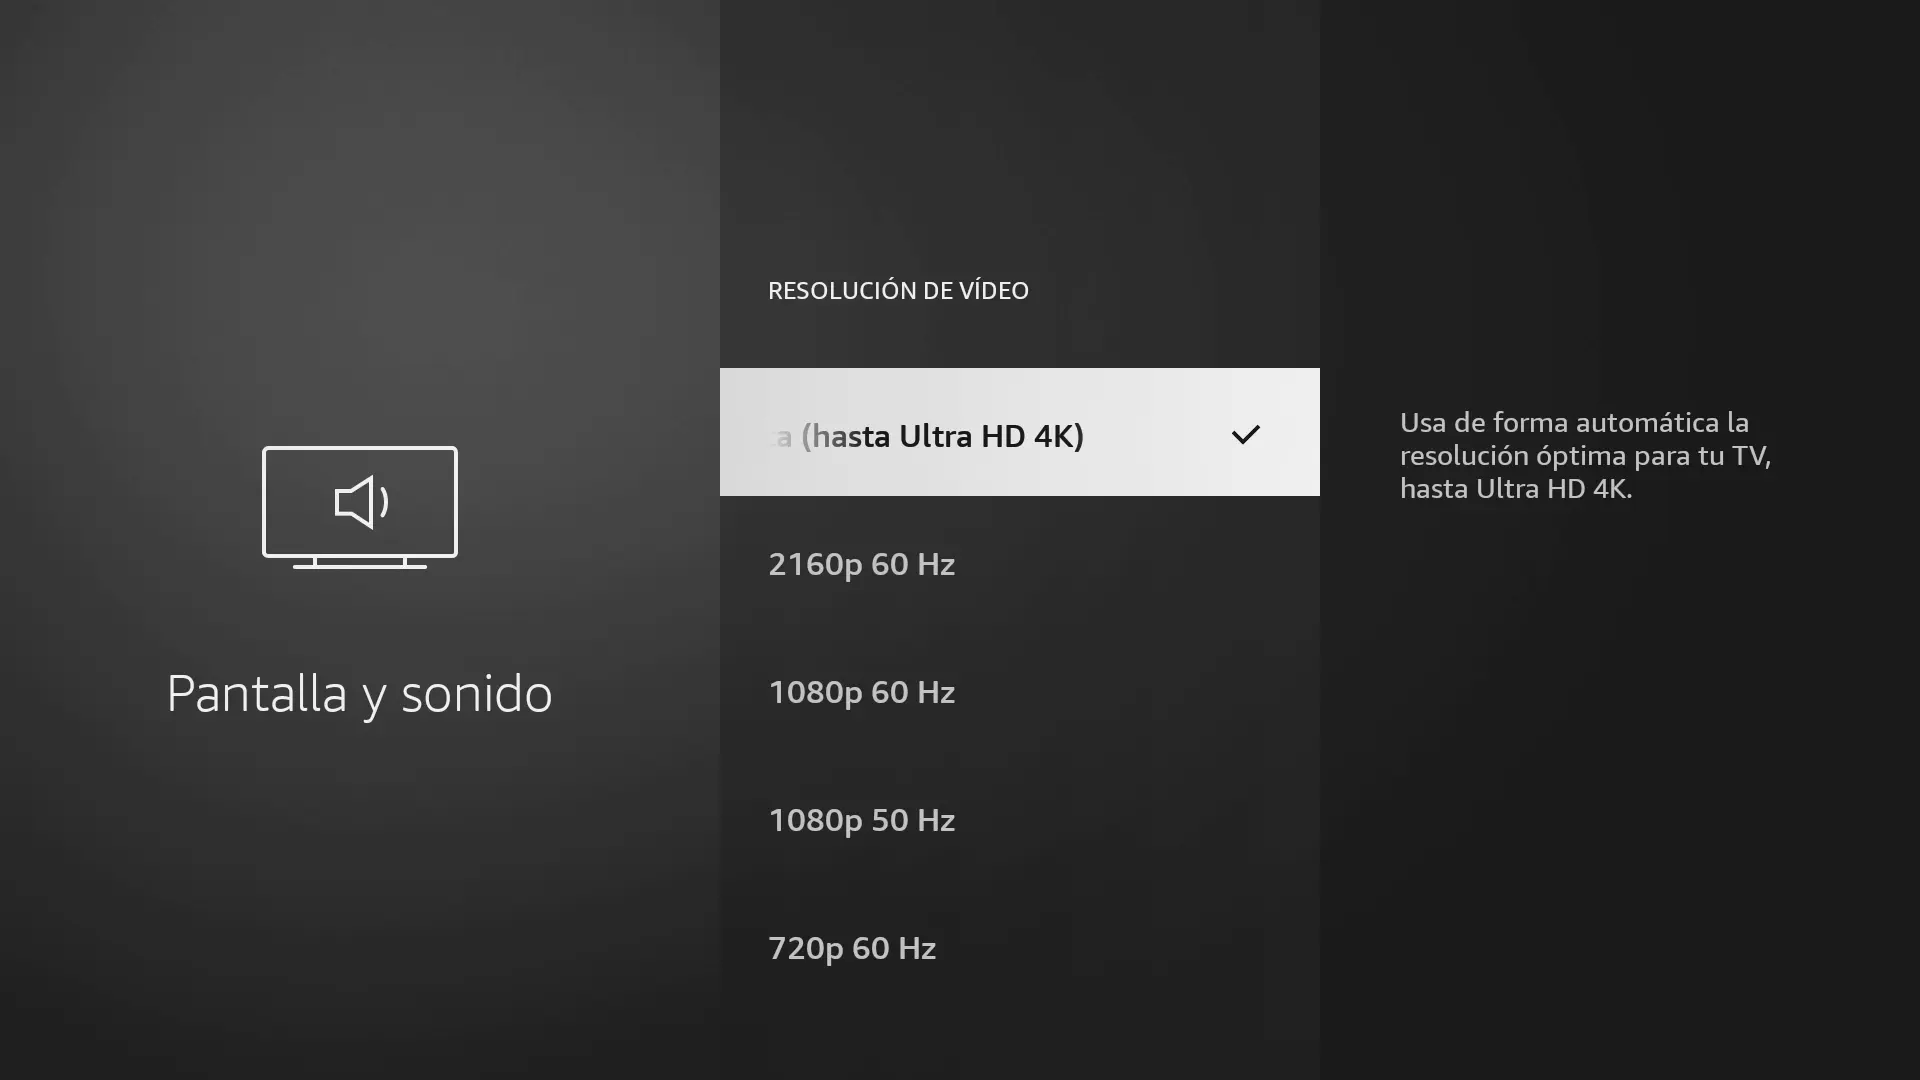 Panel de control del Fire TV Stick - Pantalla y sonido - Pantalla - Resolución - Hasta Ultra HD 4K